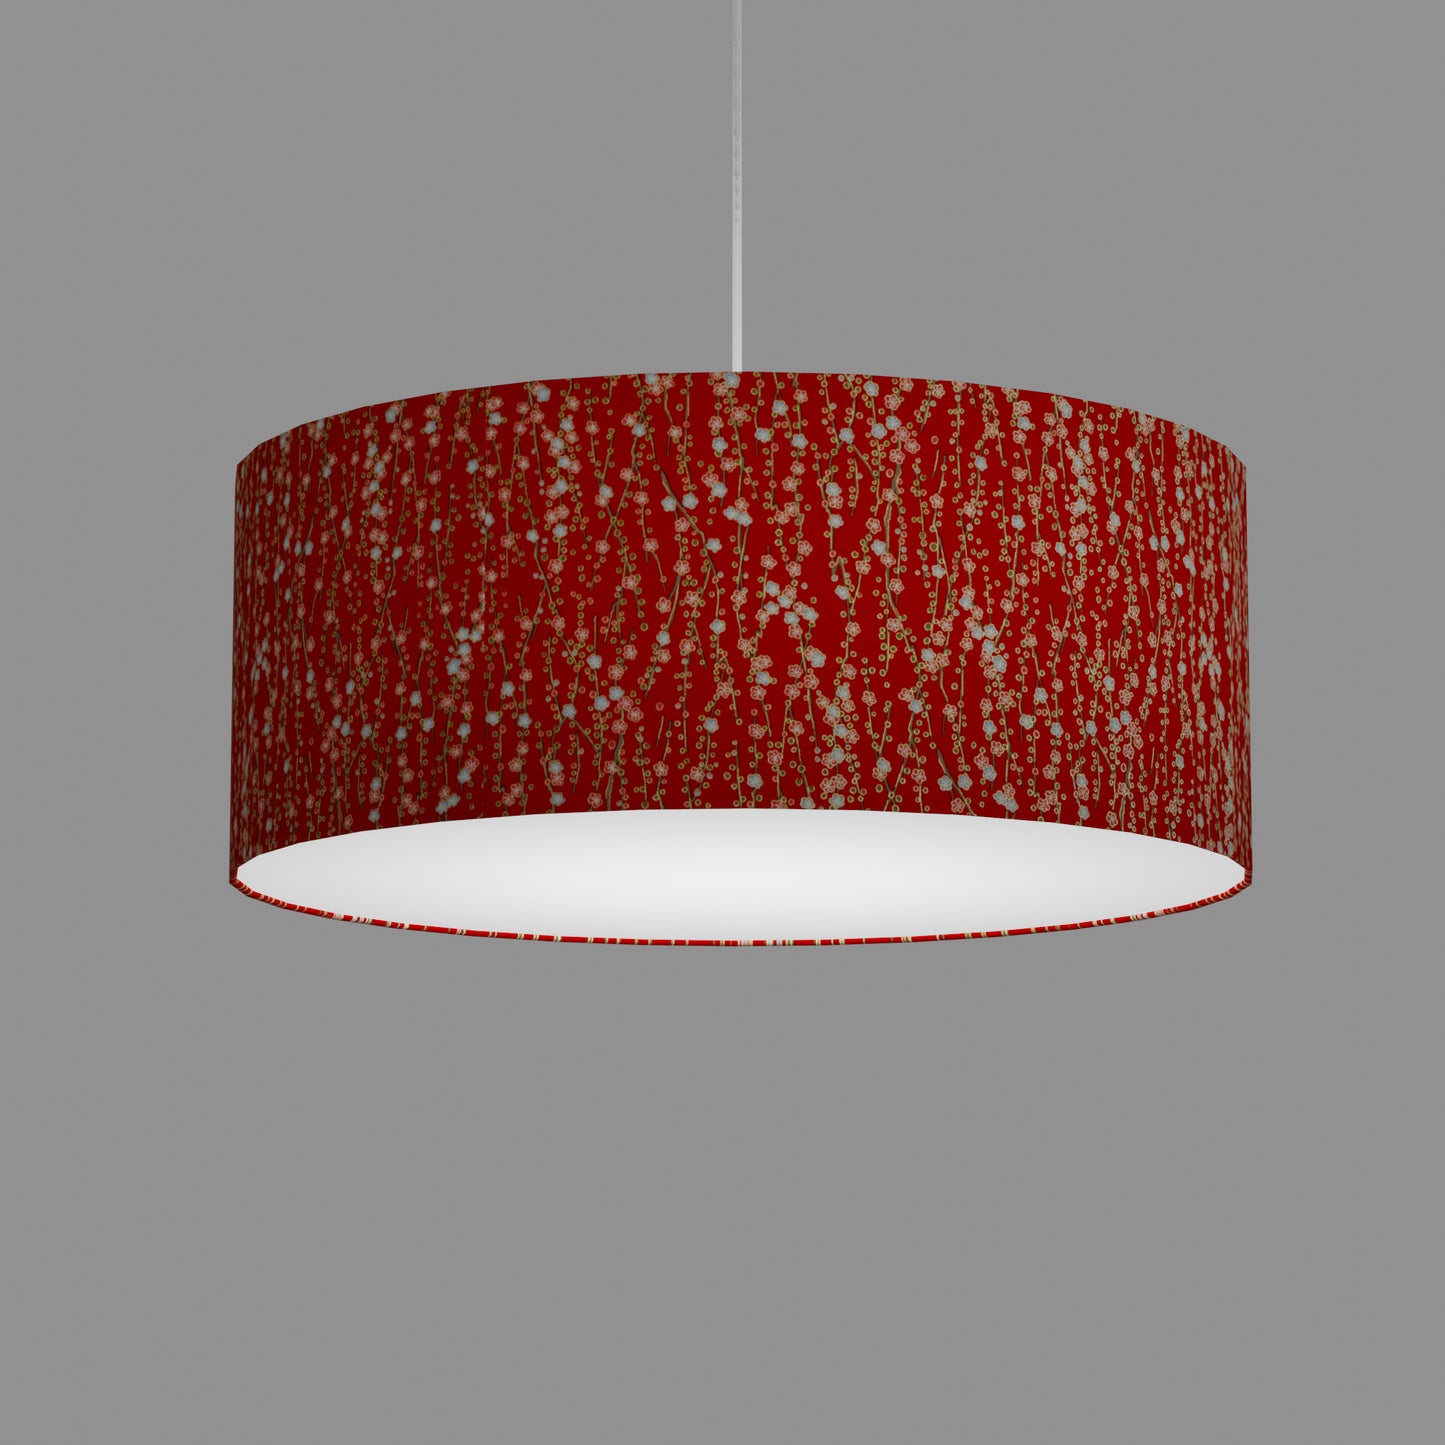 Drum Lamp Shade - W01 - Red Daisies, 50cm(d) x 20cm(h)